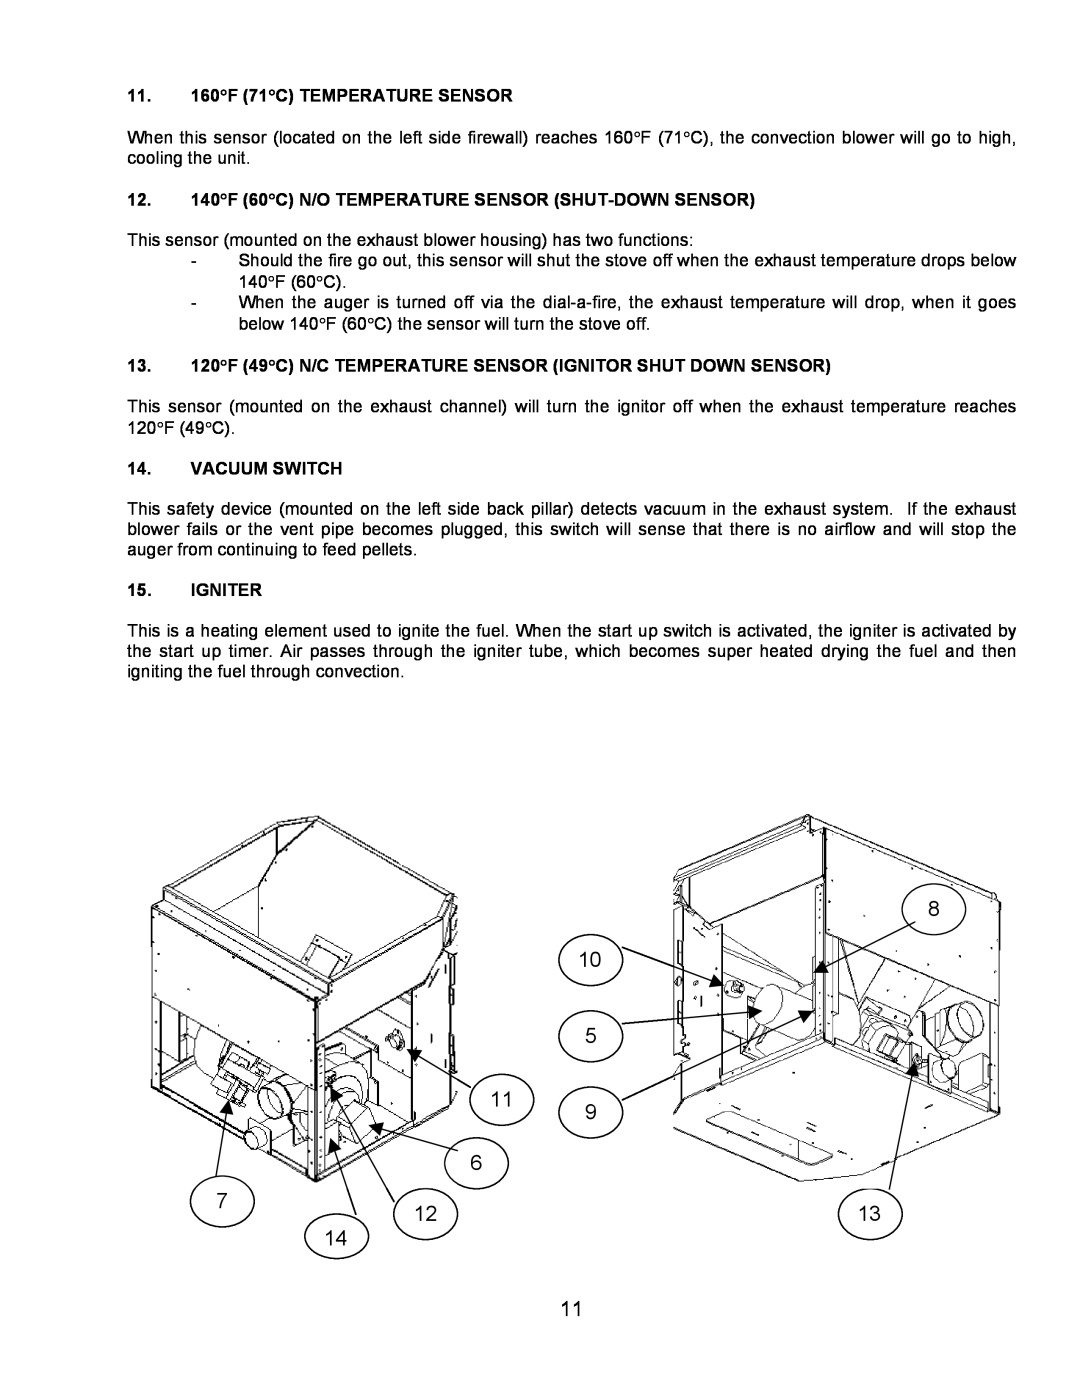 Sherwood EF-3 BAYI technical manual 11.160F 71C TEMPERATURE SENSOR, Vacuum Switch, Igniter 